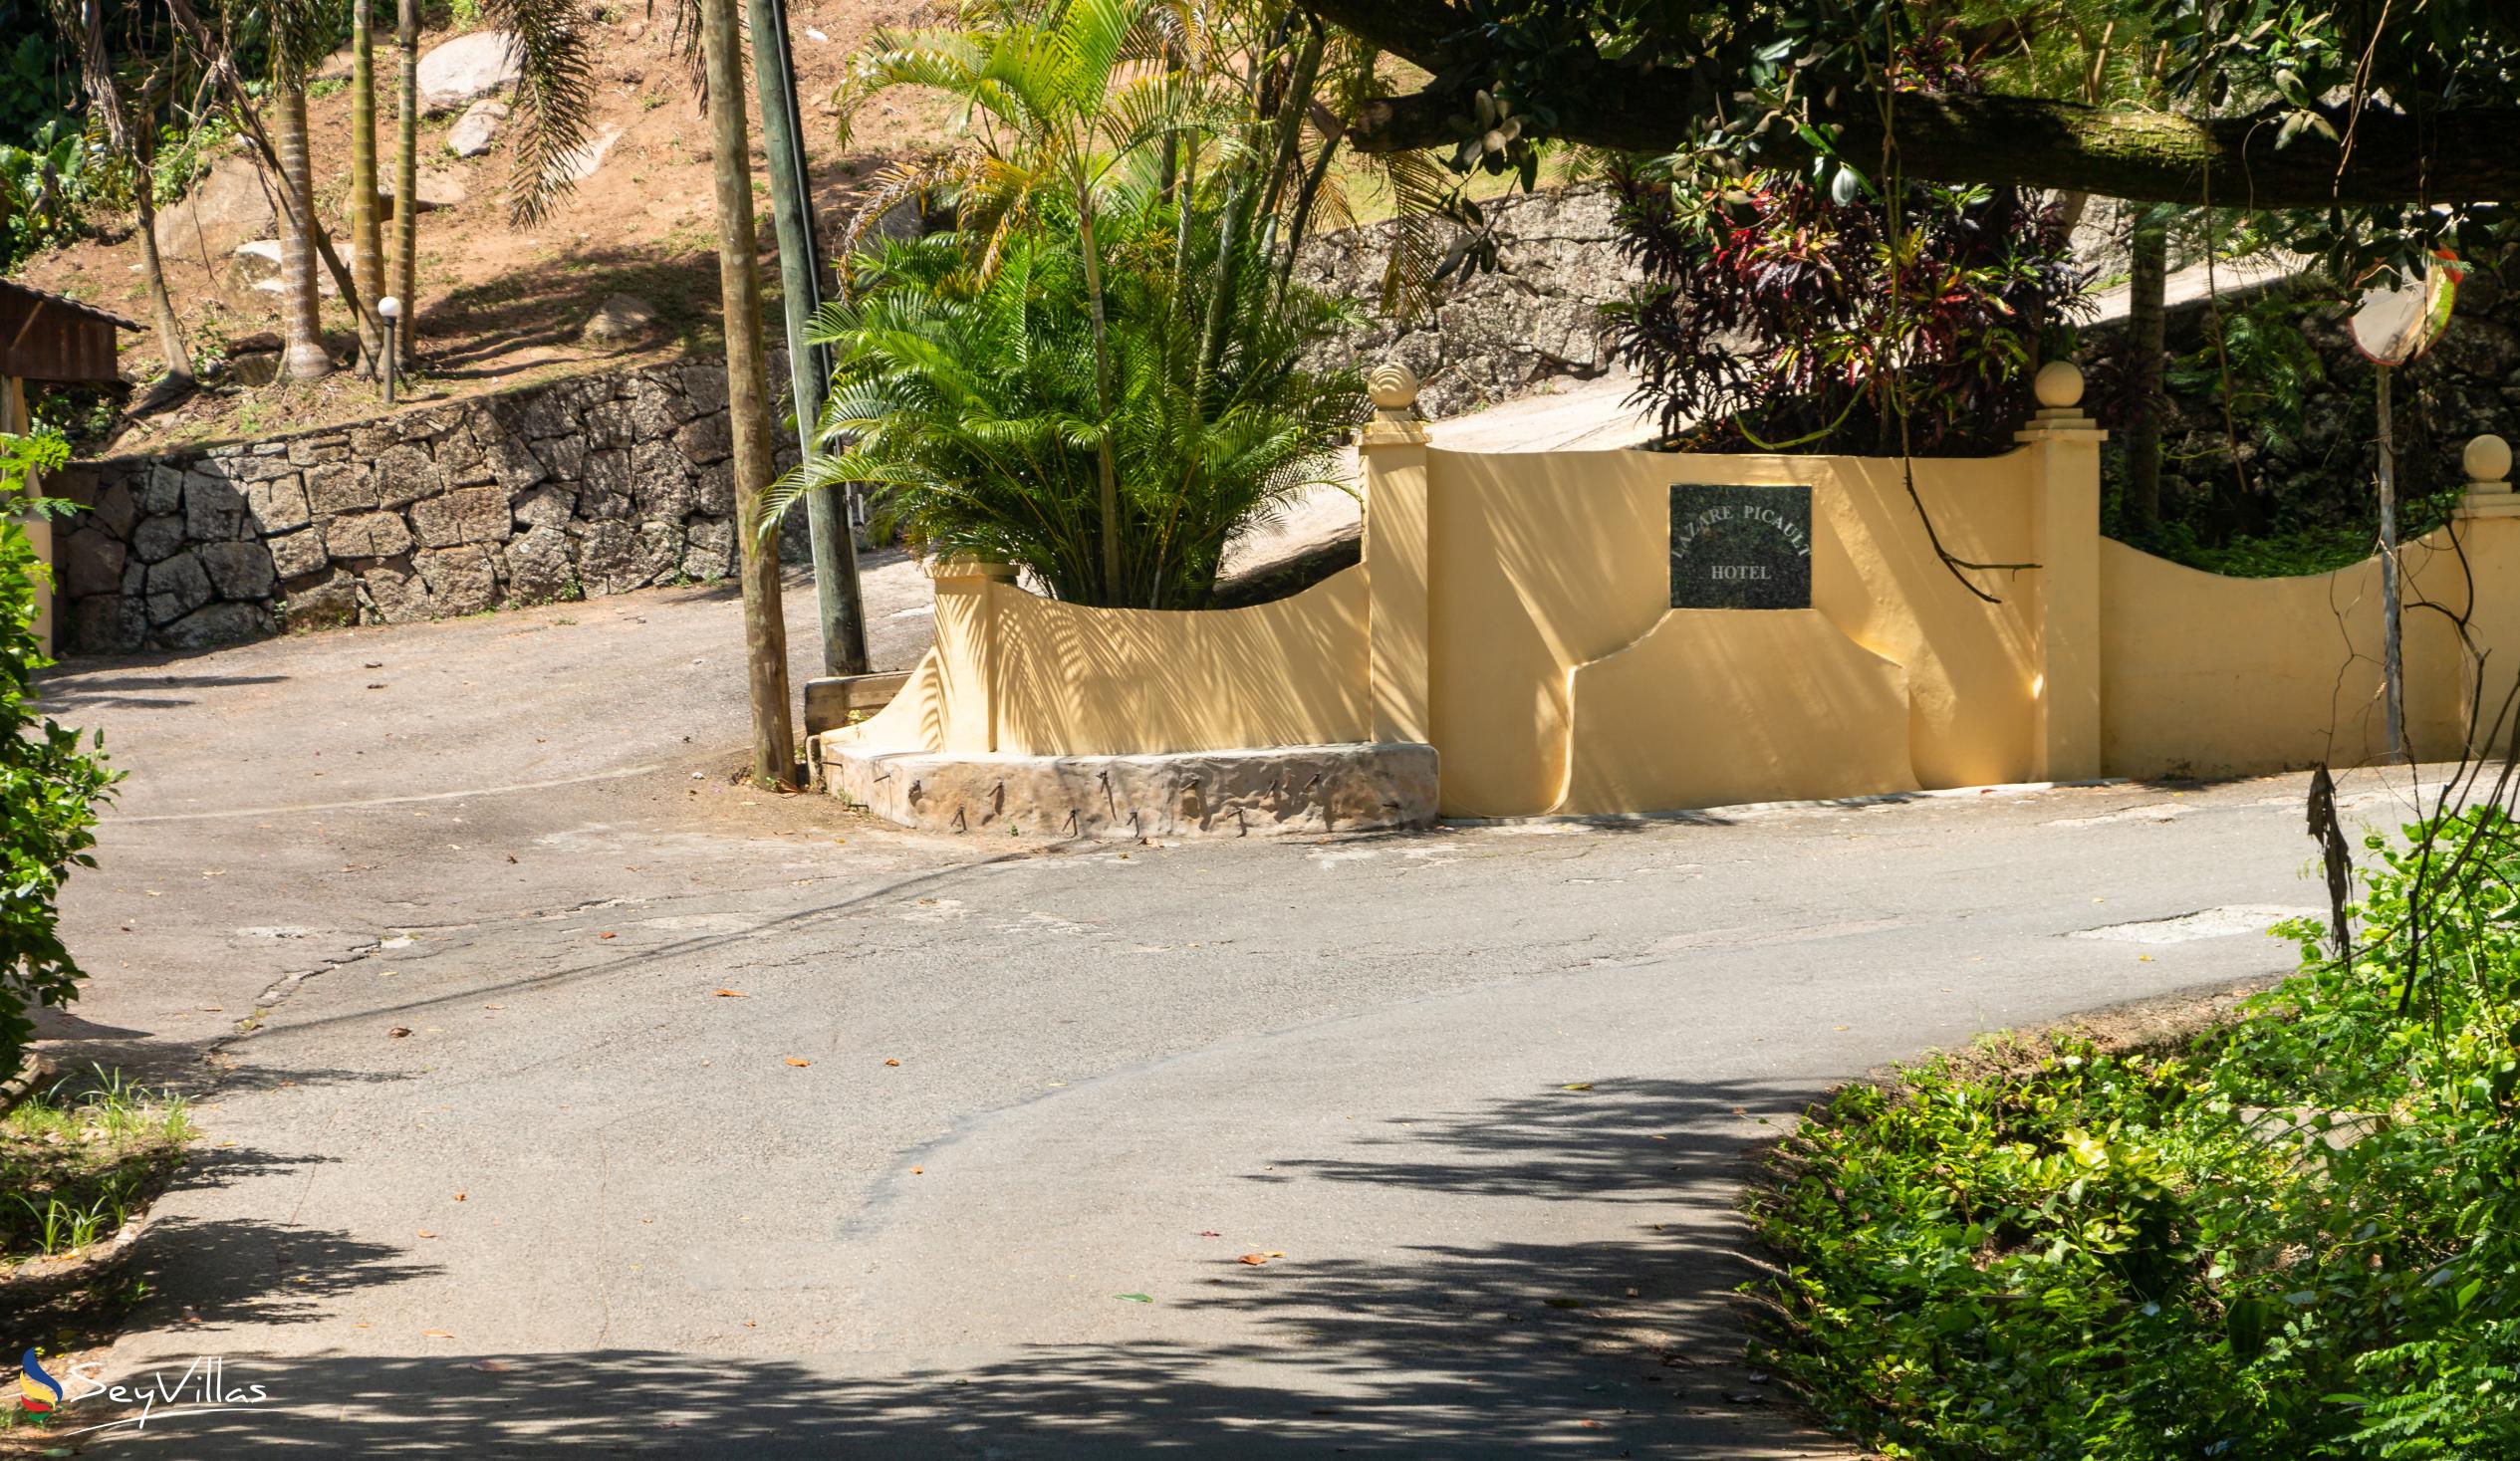 Photo 54: Lazare Picault Hotel - Location - Mahé (Seychelles)